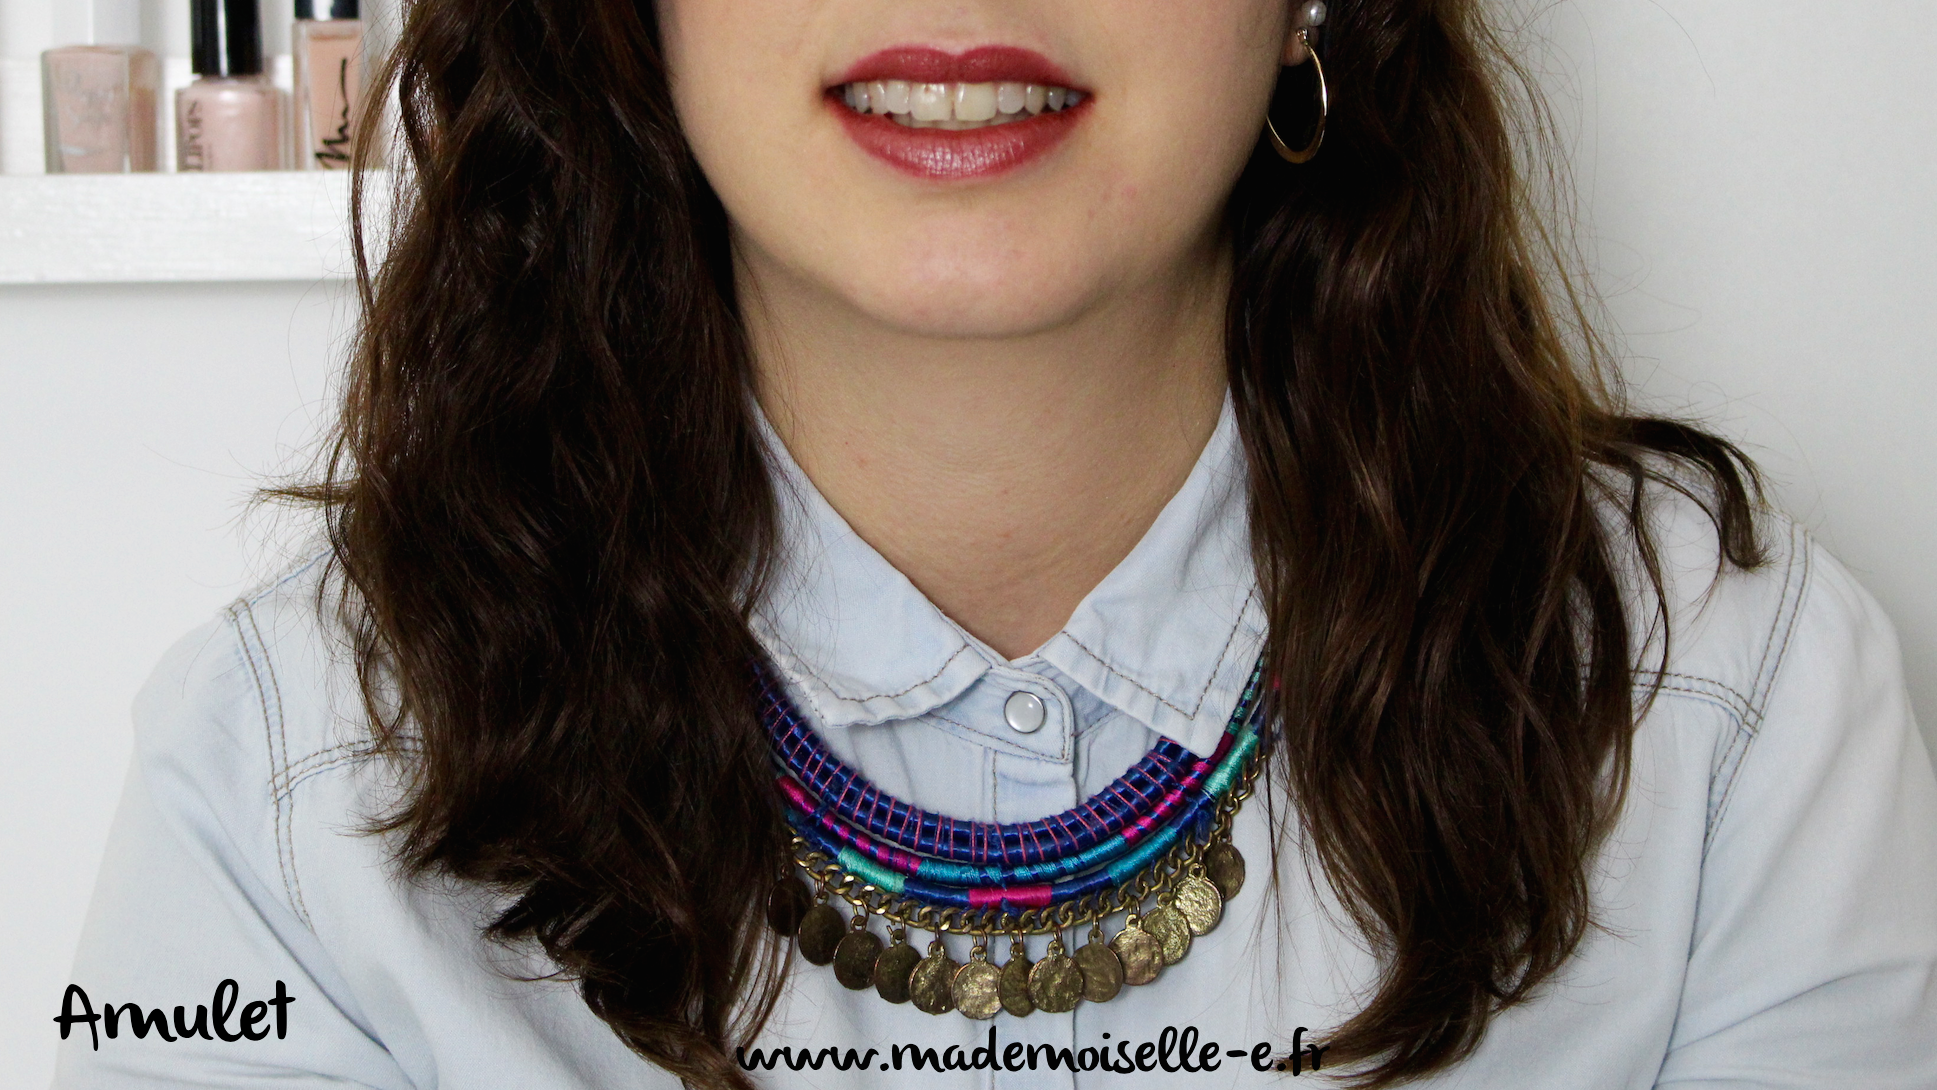 lipstick_vice_amulet_mademoiselle-e